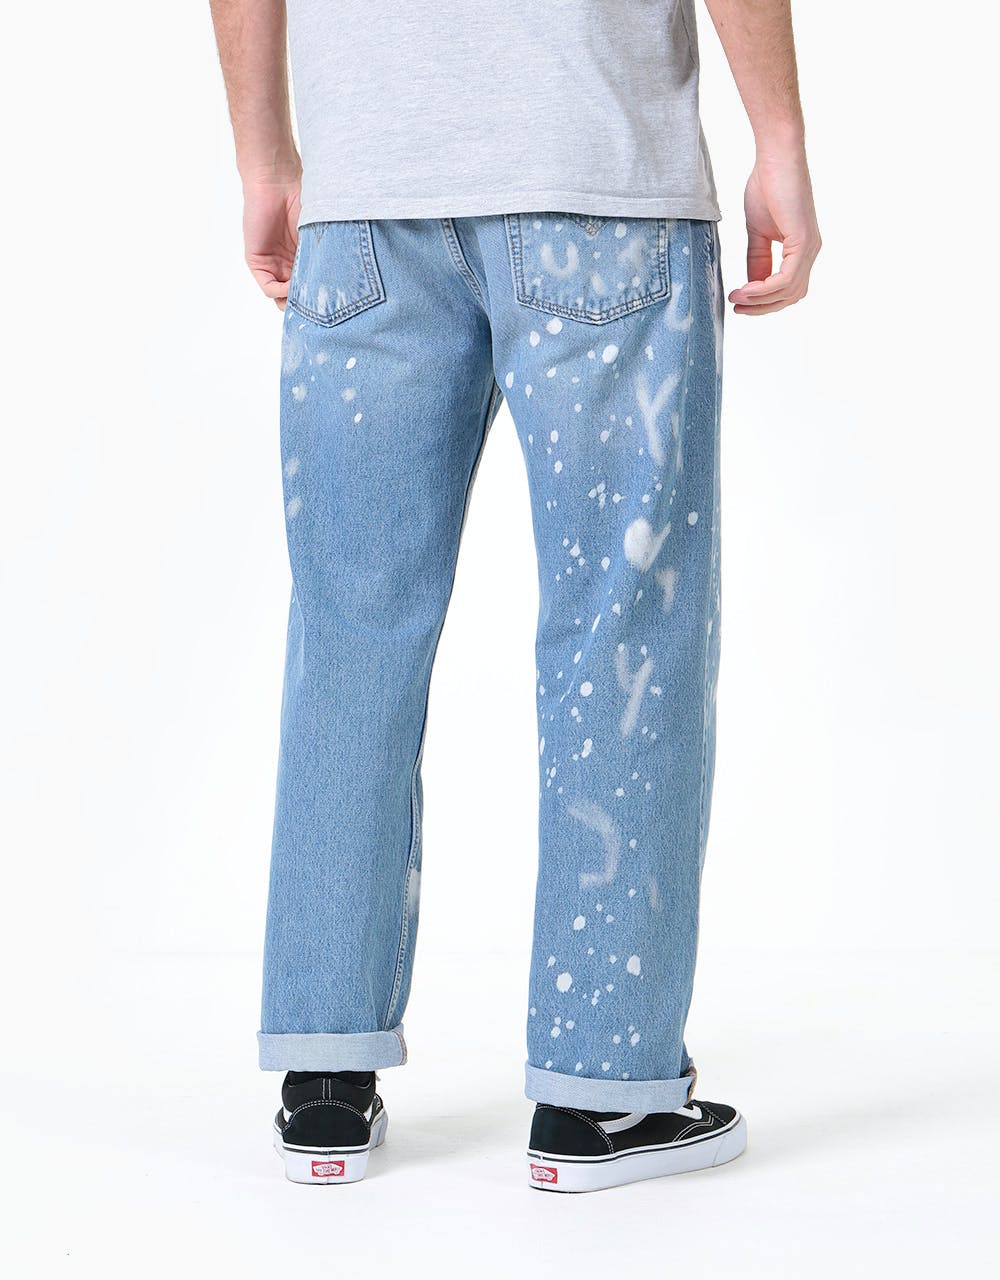 Levi's Skateboarding Baggy 5 Pocket Denim Jeans - S&E Jackson